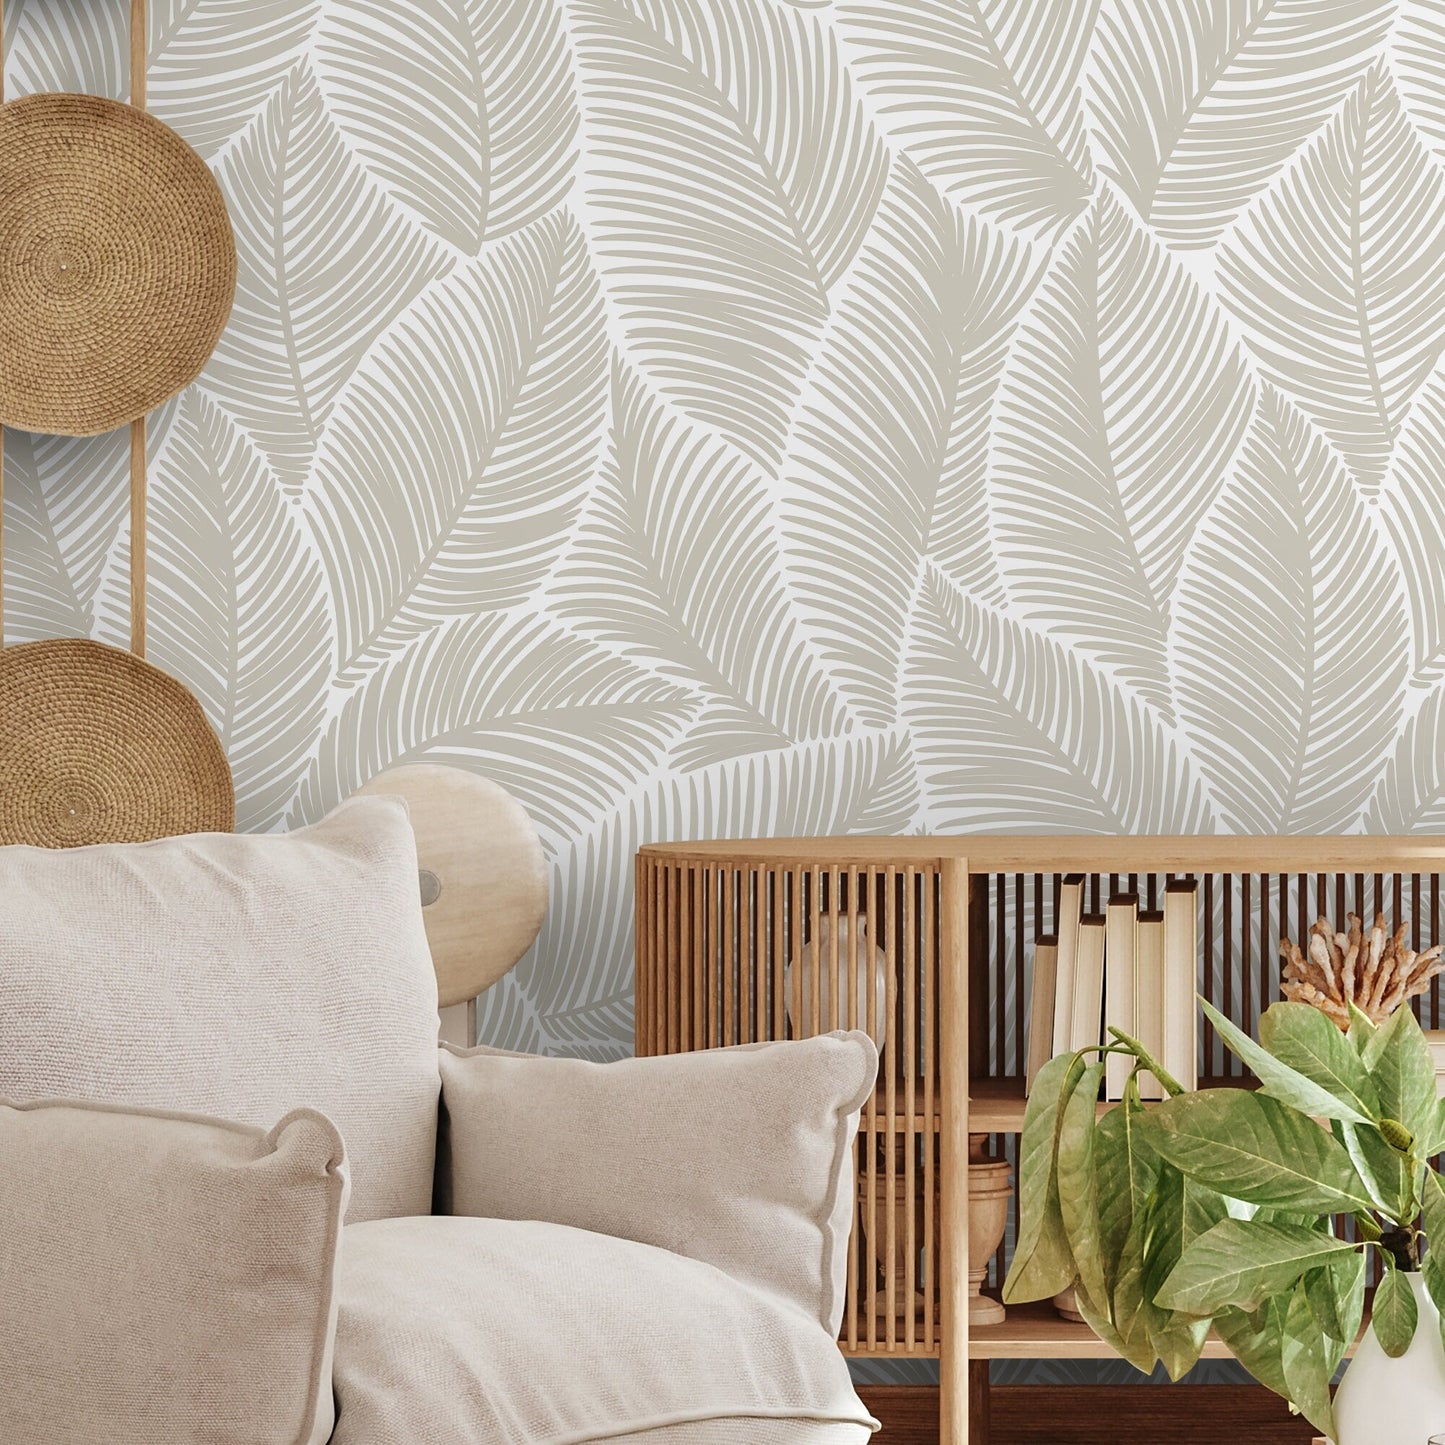 Removable Wallpaper, Scandinavian Wallpaper, Temporary Wallpaper, Minimalistic Wallpaper, Peel and Stick Wallpaper, Leaf Wallpaper - B521